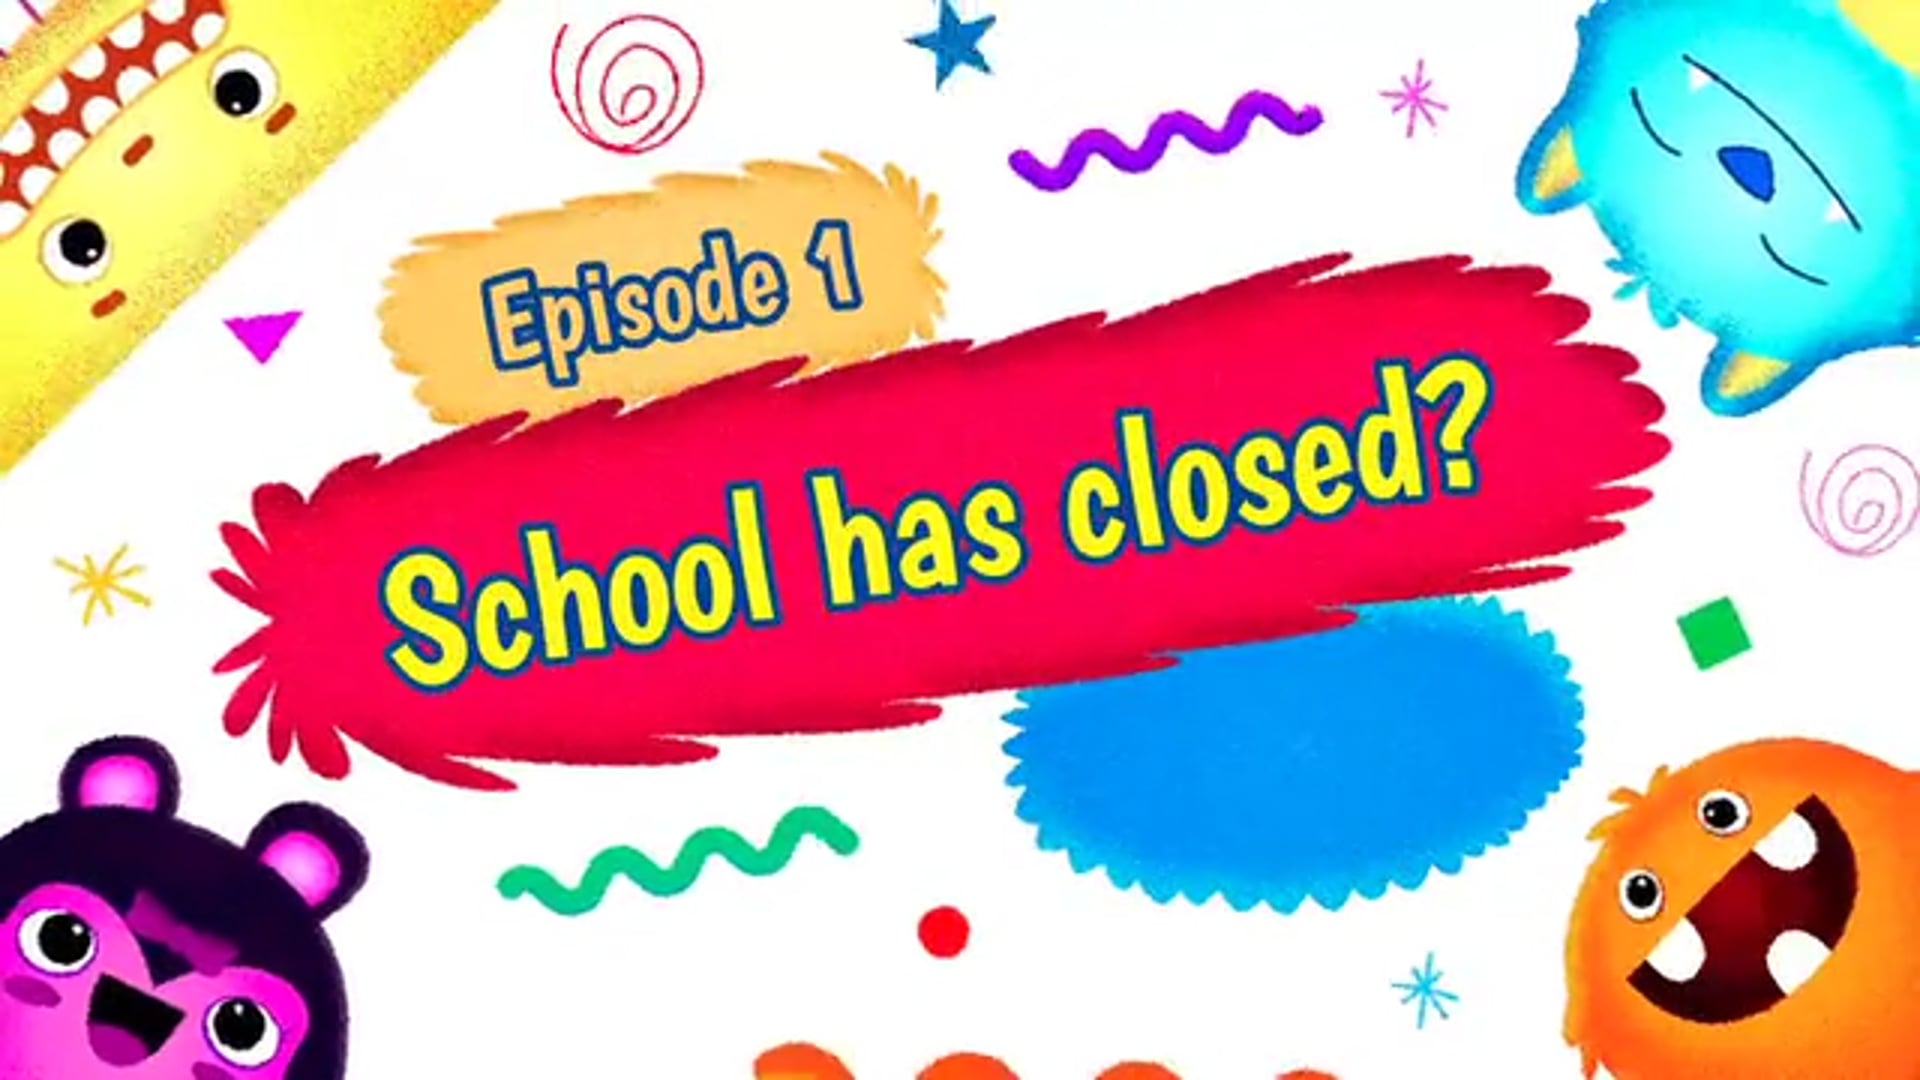 Episode 1 - School has closed?